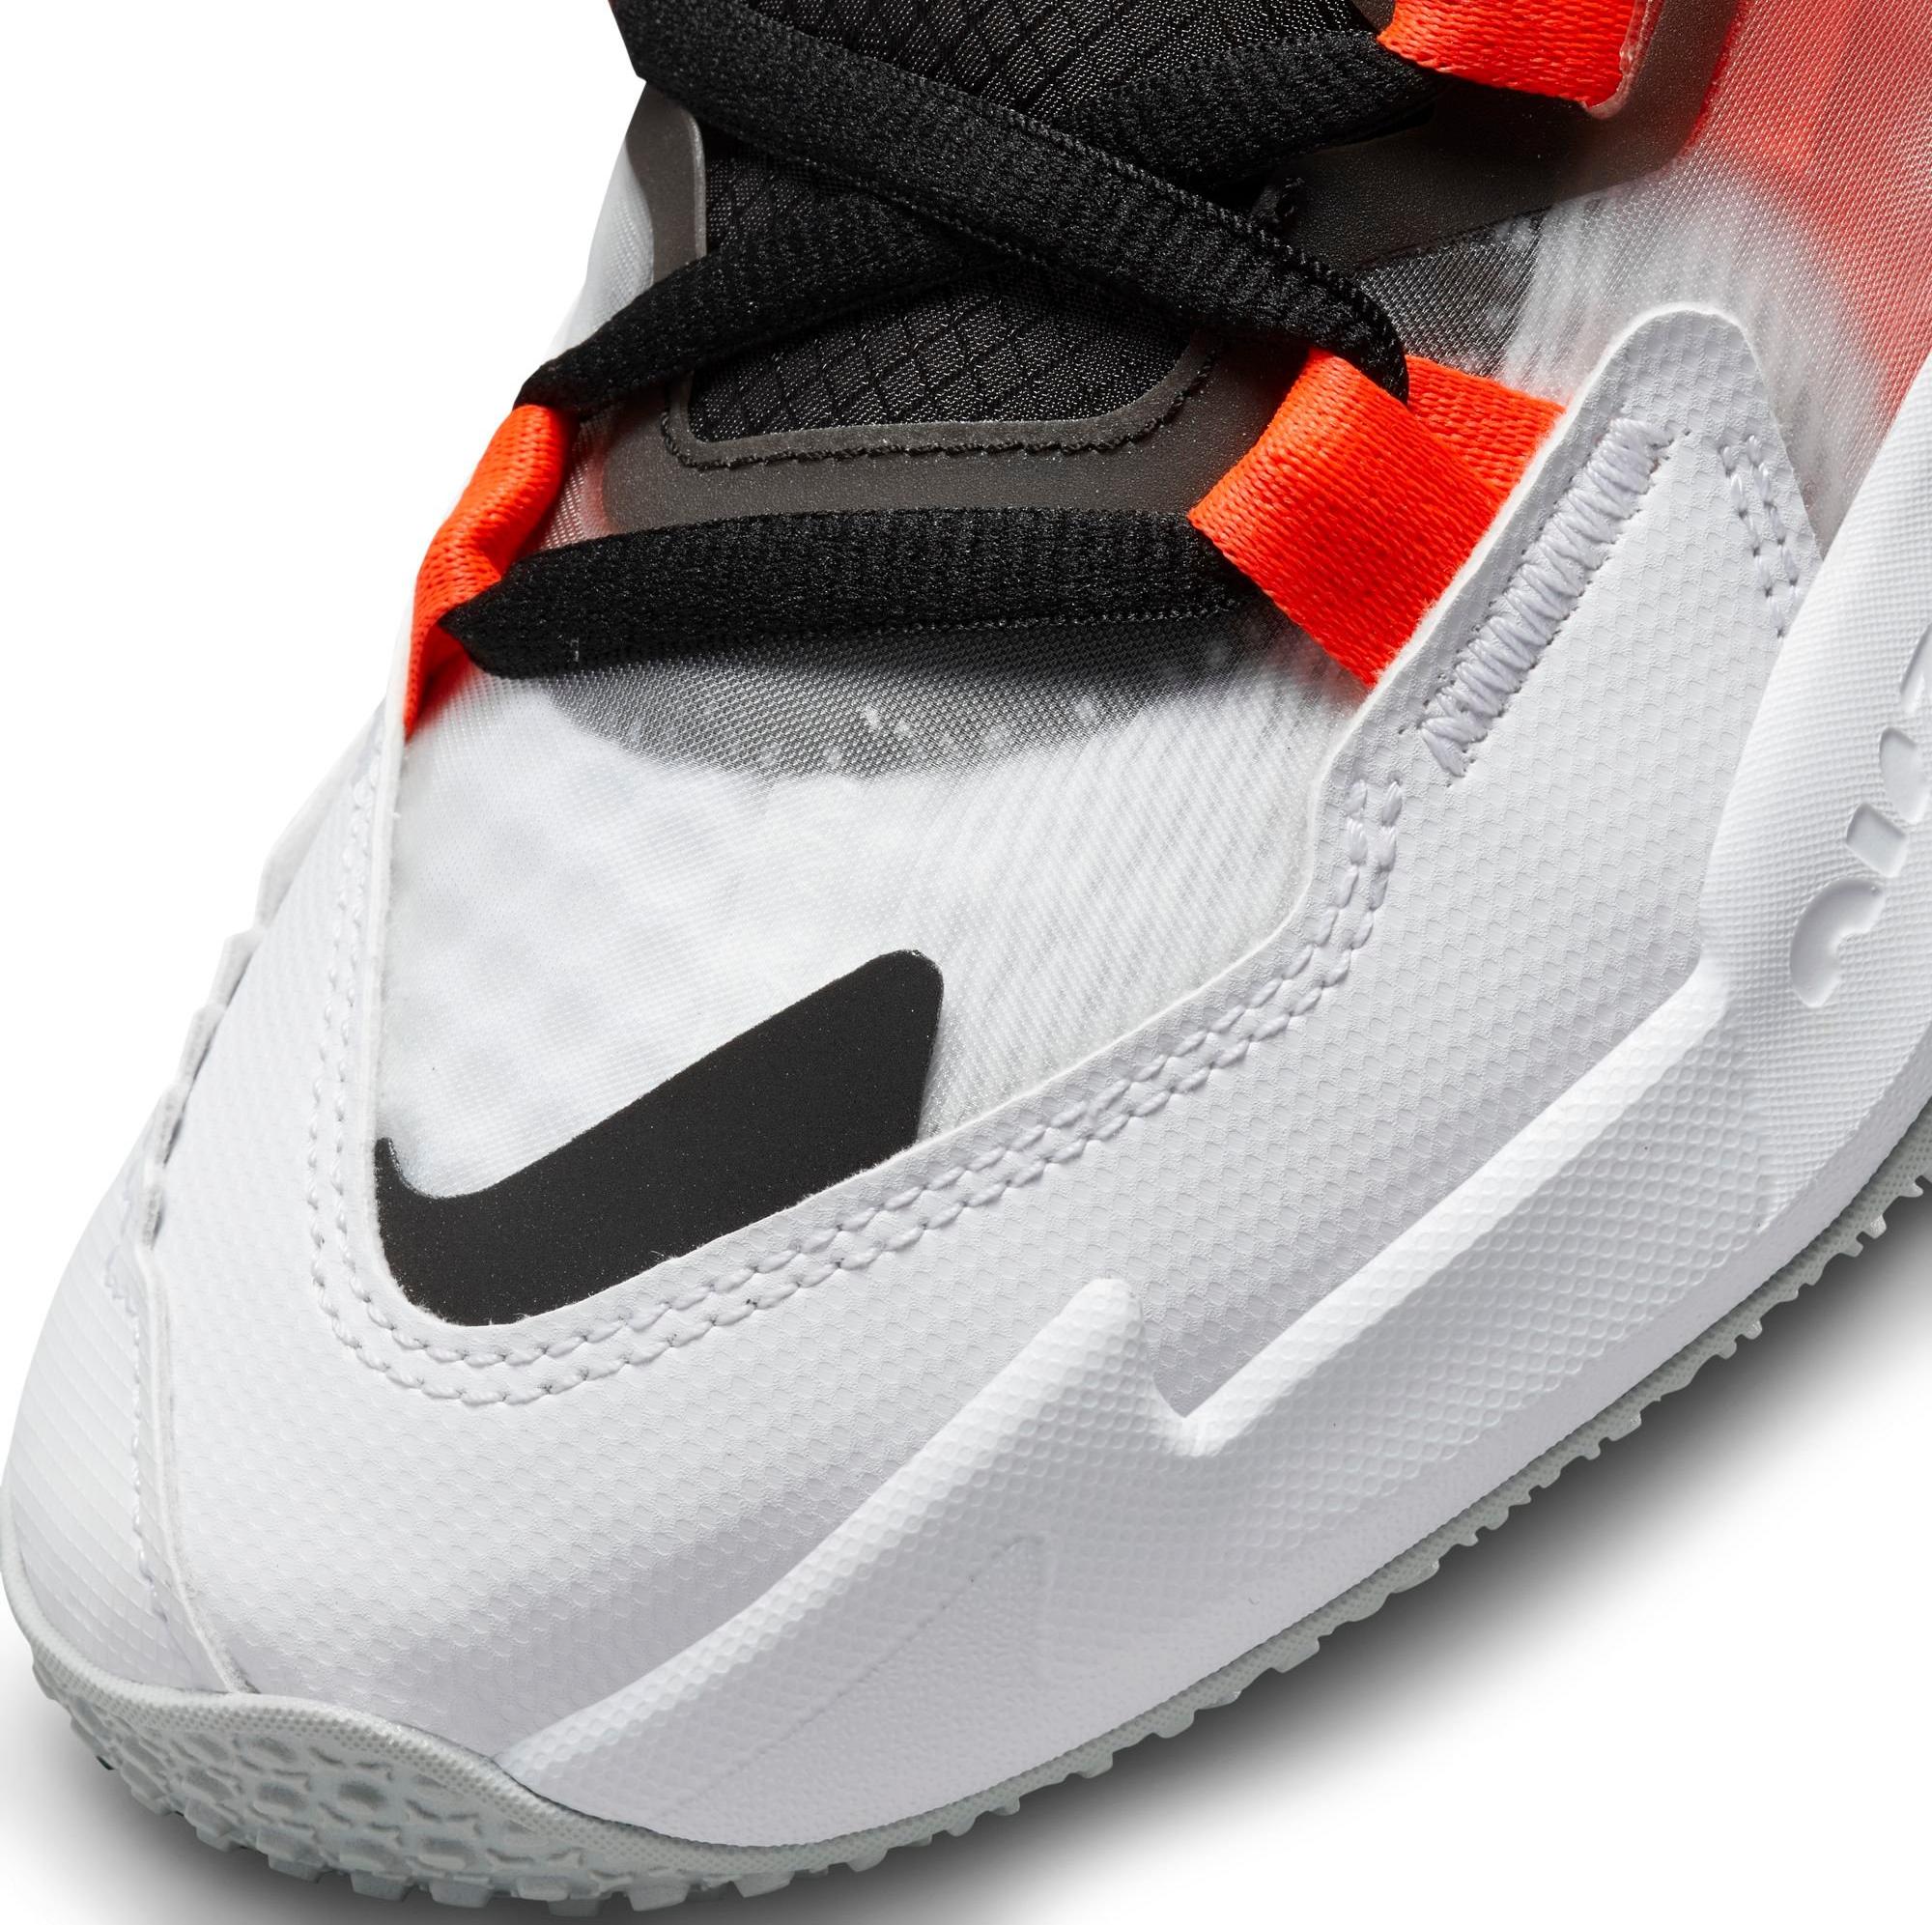 Sneakers Release – Jordan Why Not? Zer0.5 “White/Bright Crimson/Black ...